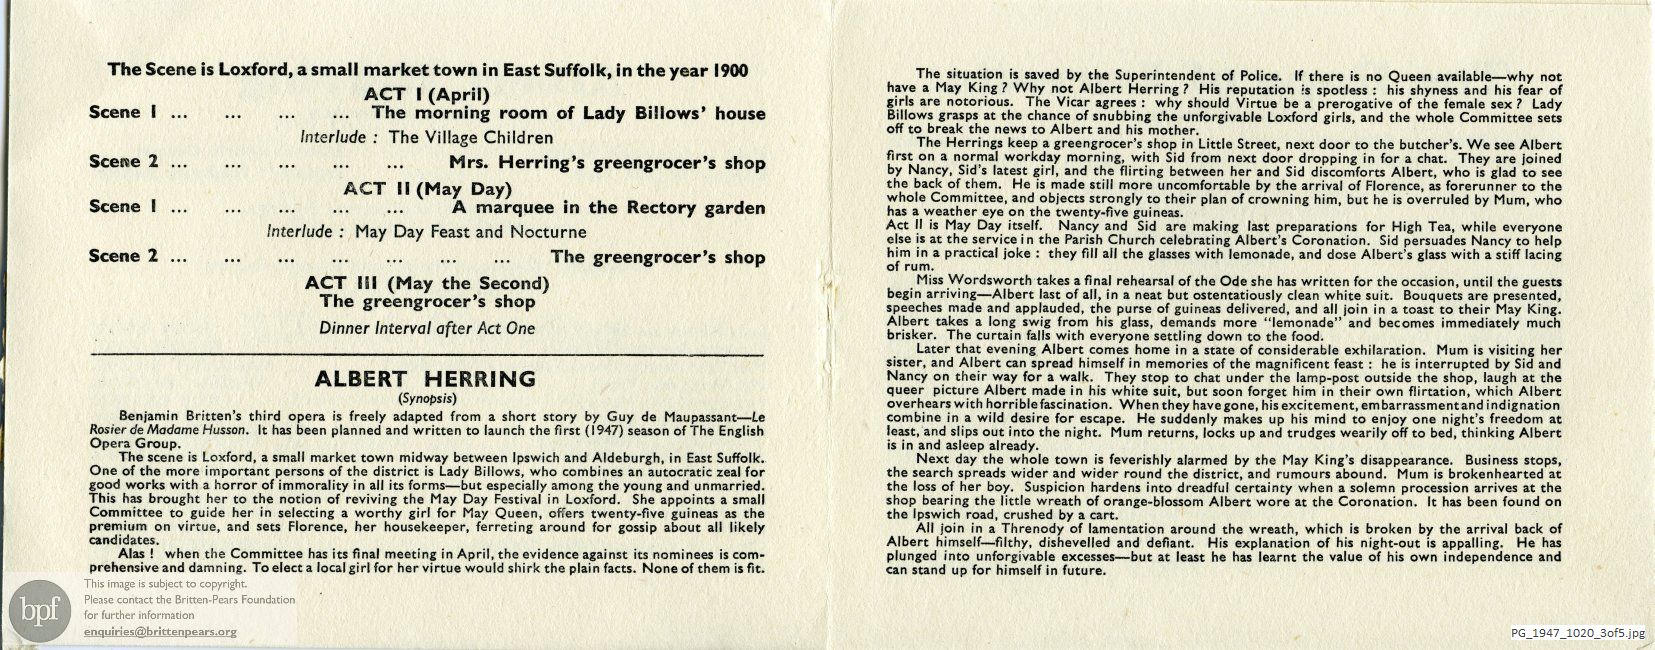 Concert programme:  Britten, Albert Herring and The Rape of Lucretia, Bournemouth Pavilion, Bournemouth